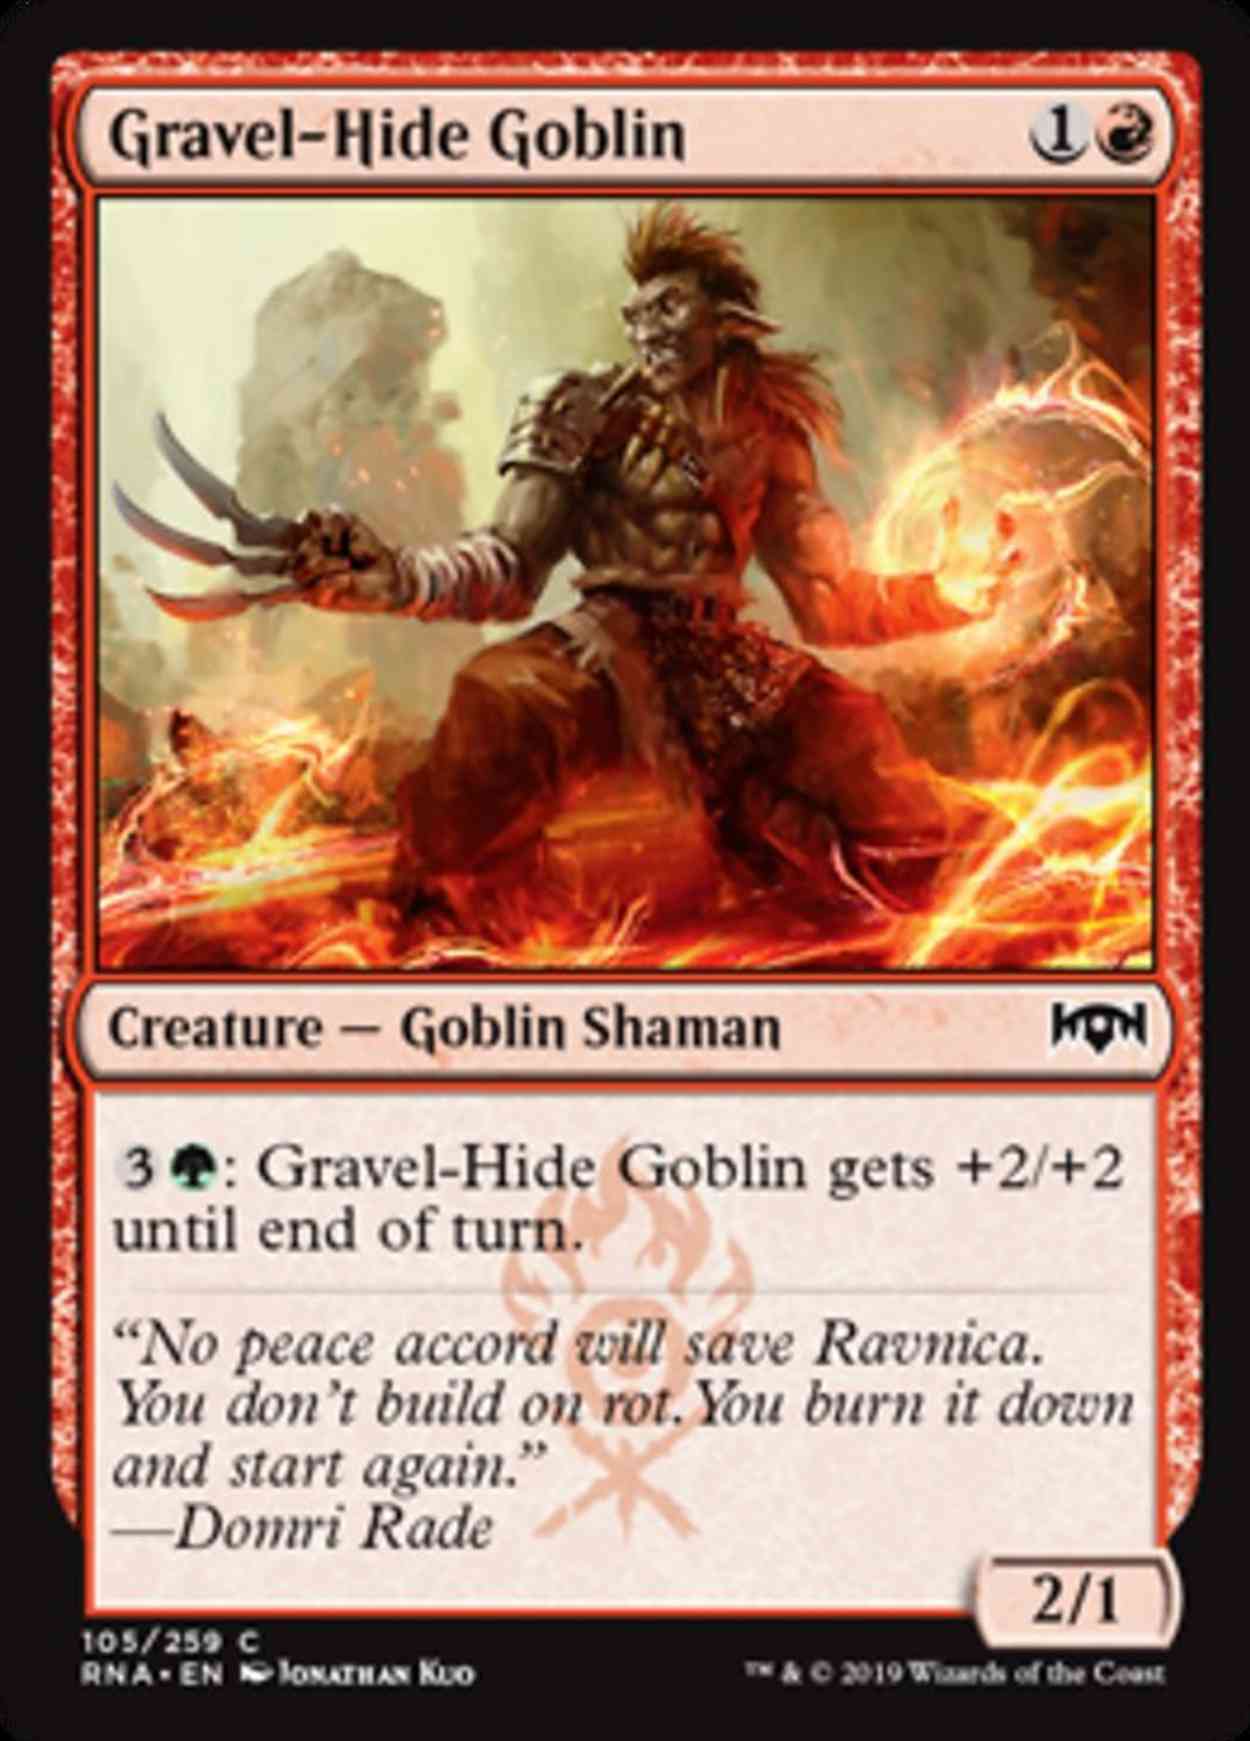 Gravel-Hide Goblin magic card front